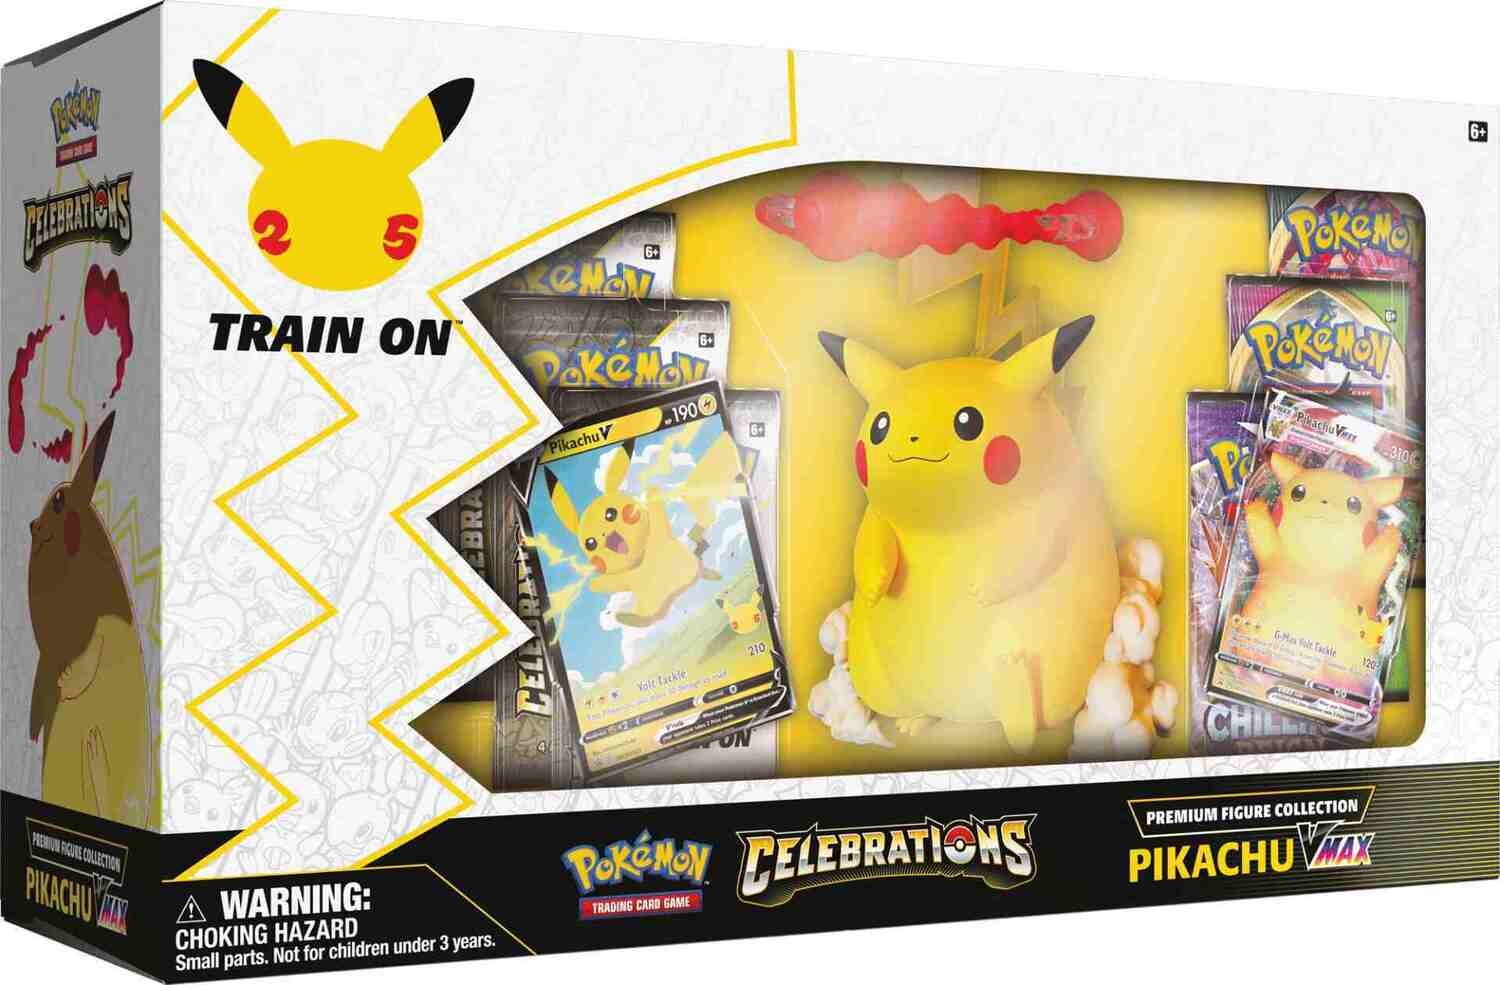 Pokémon - Celebrations - Pikachu VMAX Premium-Figuren-Kollektion - EN